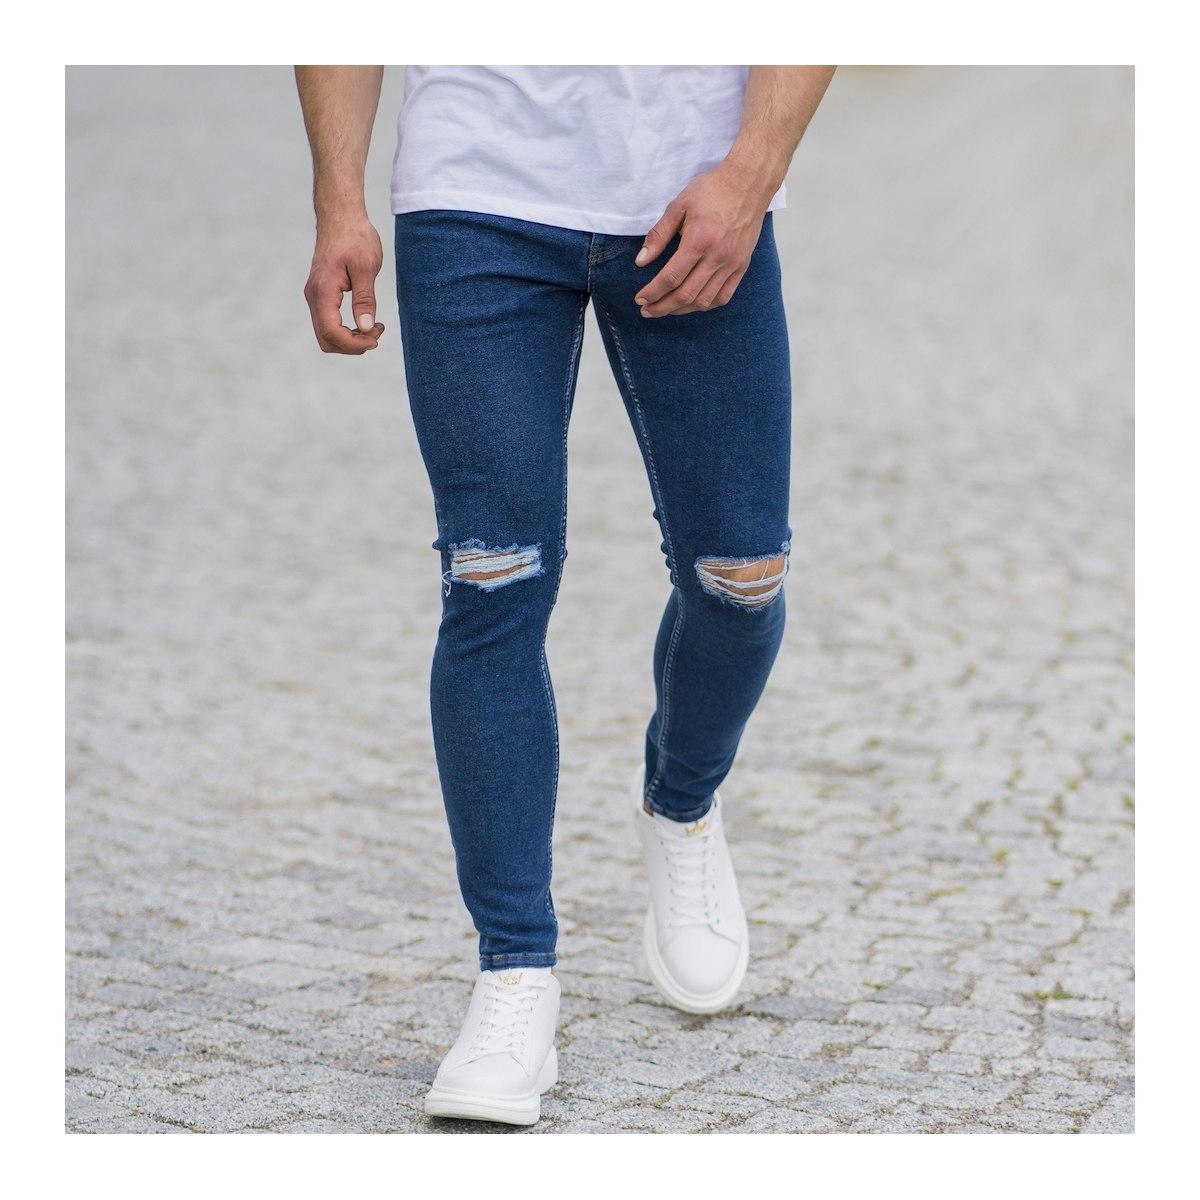 Herren Skinny Jeans mit Rissen in dunkelblau - 7